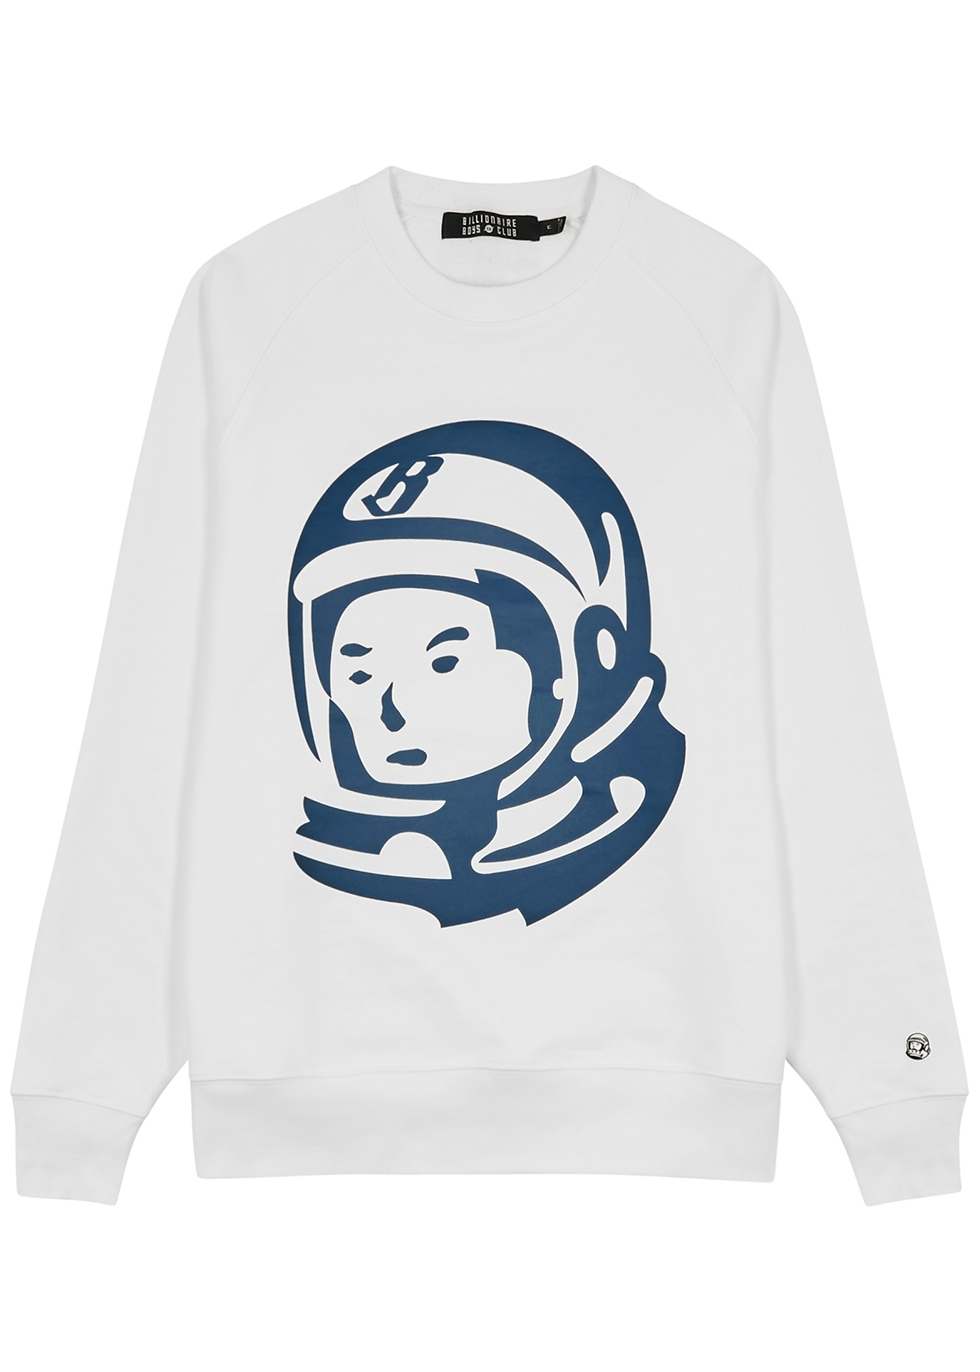 Astro white printed cotton sweatshirt